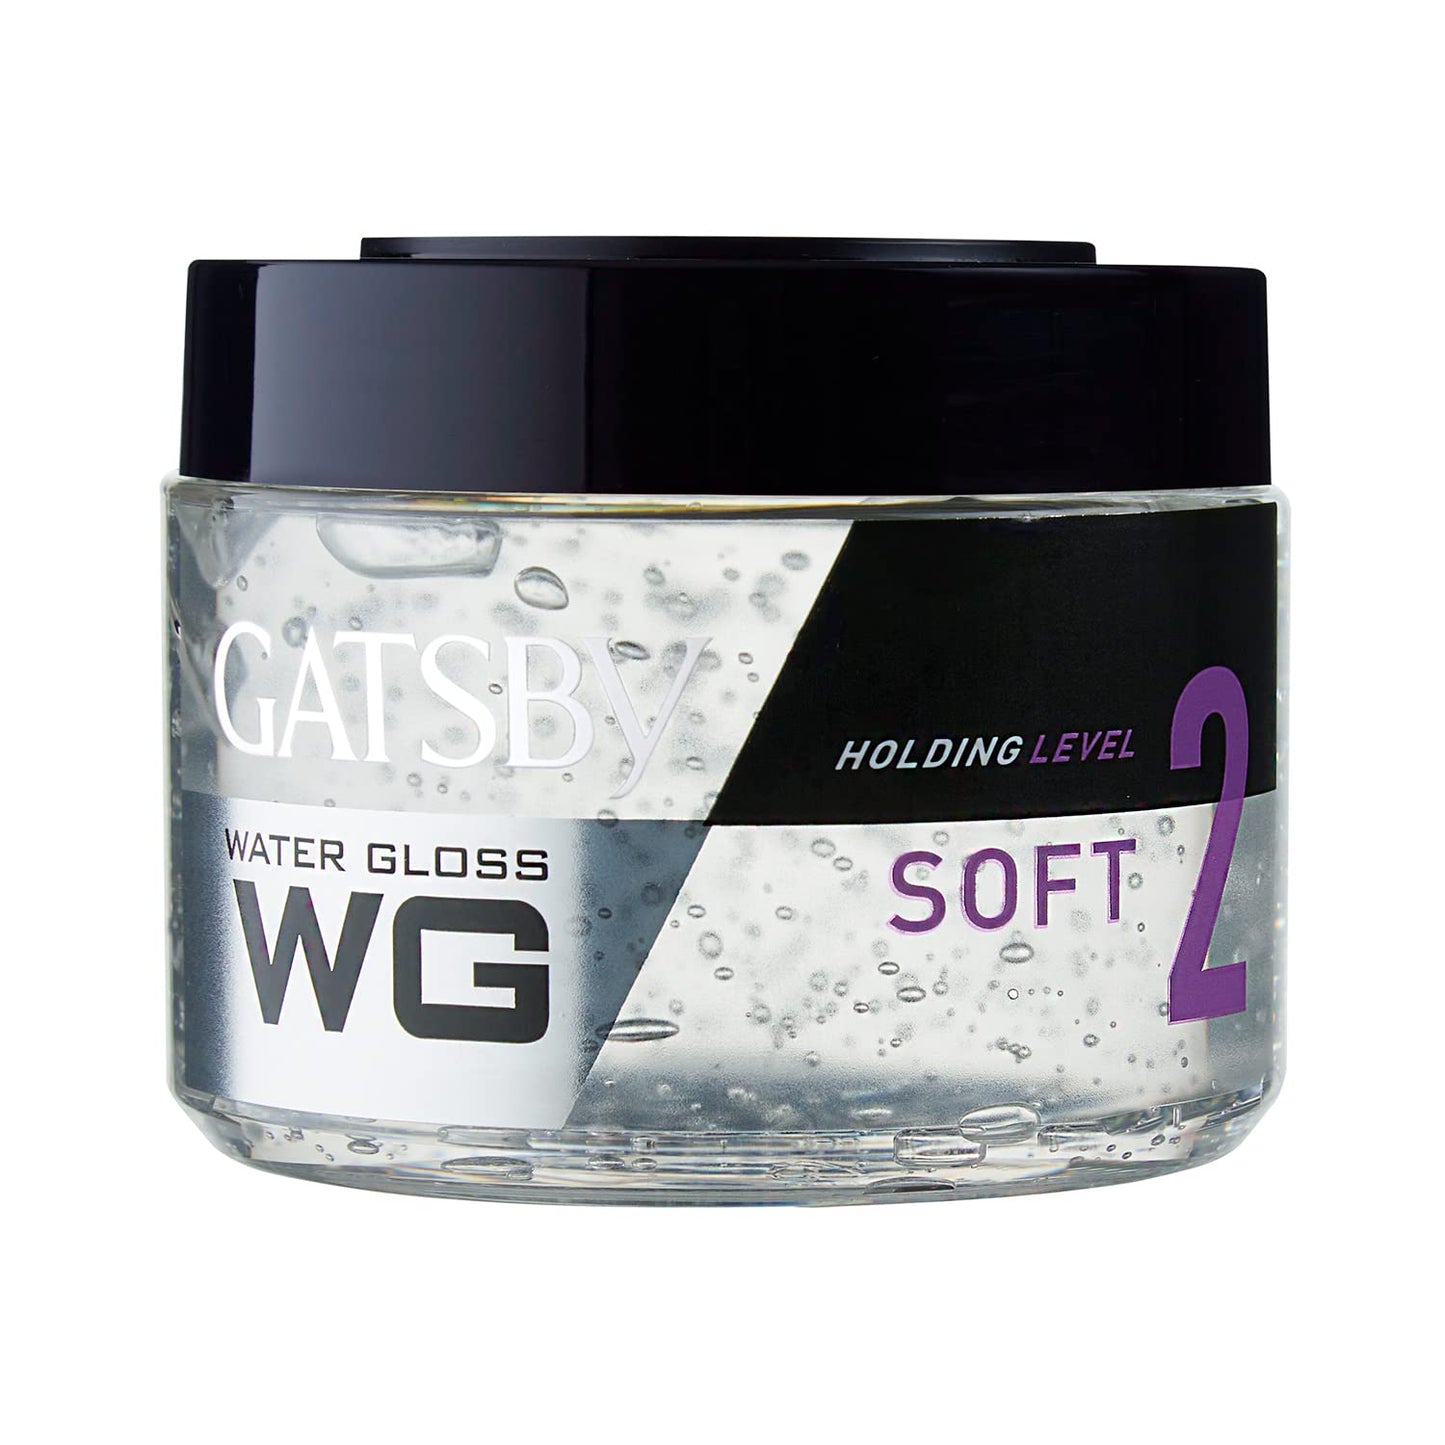 Gatsby Water Gloss Soft Gel 300Gm Gat'Sby Water Gloss Soft Gel 300Gm - Highfy.pk